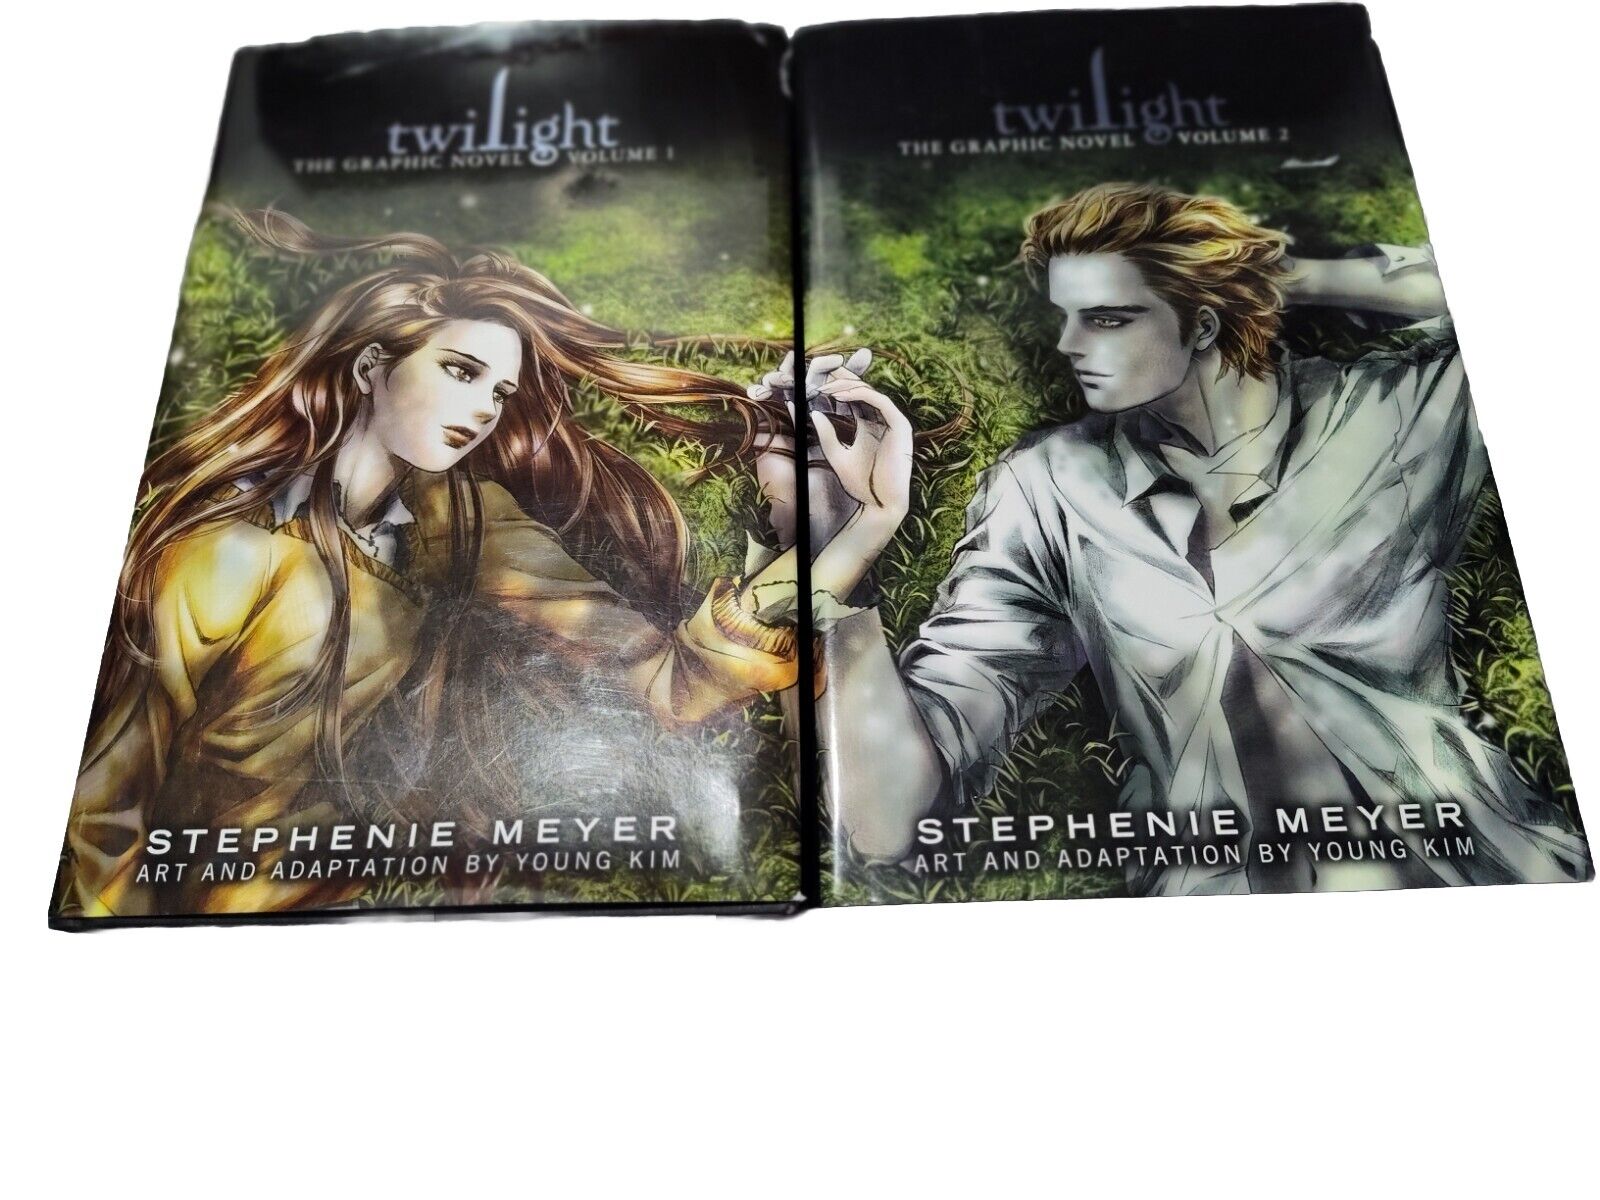 The Twilight Saga New Moon: Graphic Novel, Vol. 1 & 2 Vol 1 Is 1st Print READ